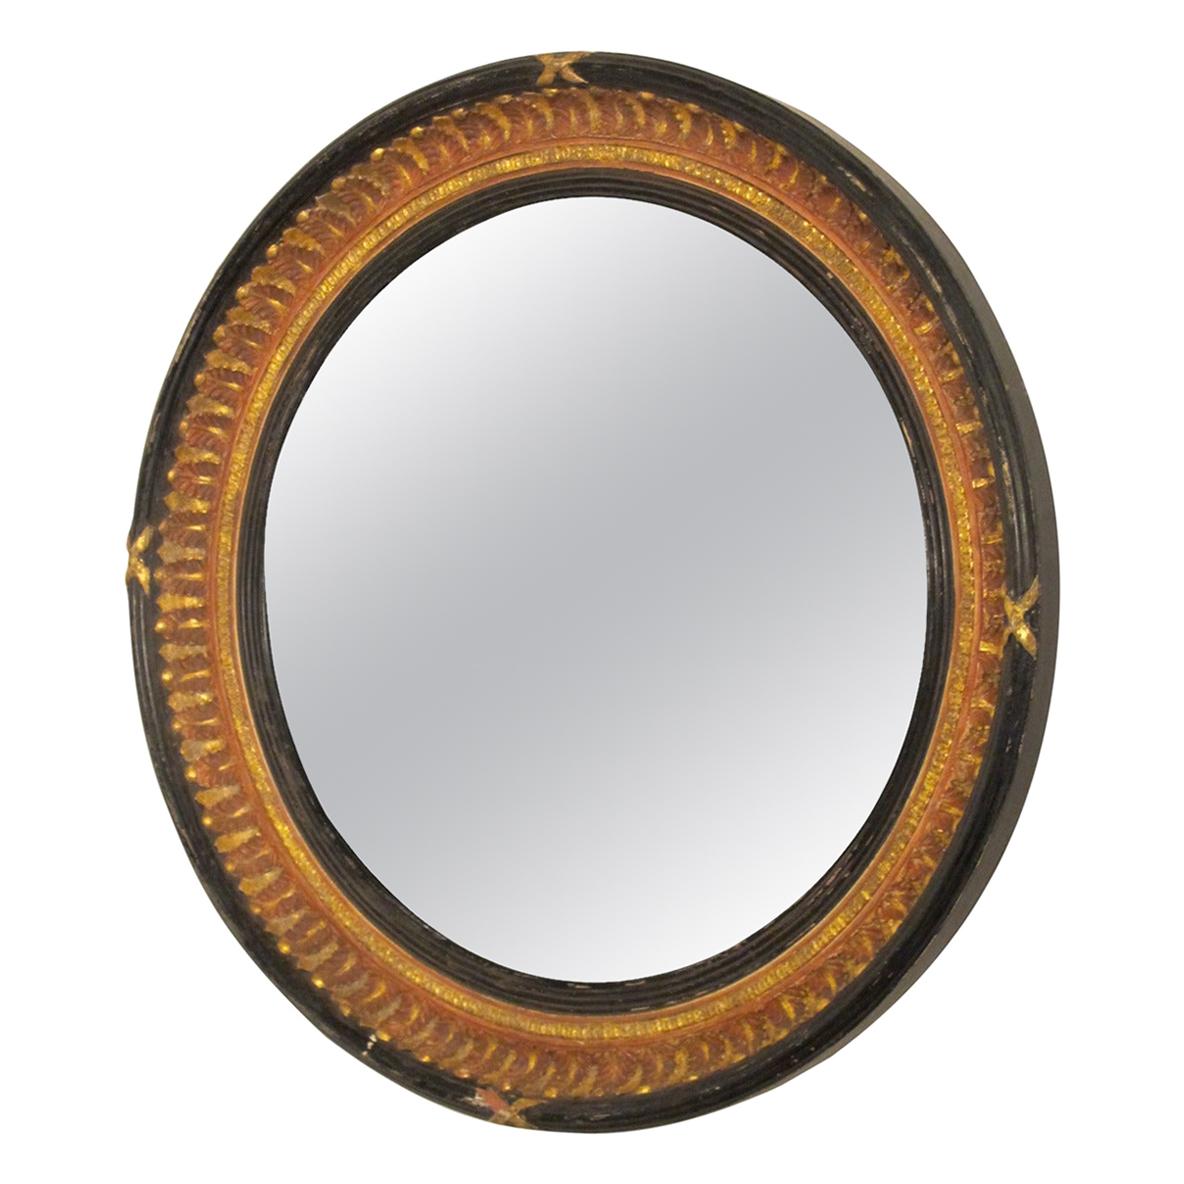 Unusual English Round Convex Mirror